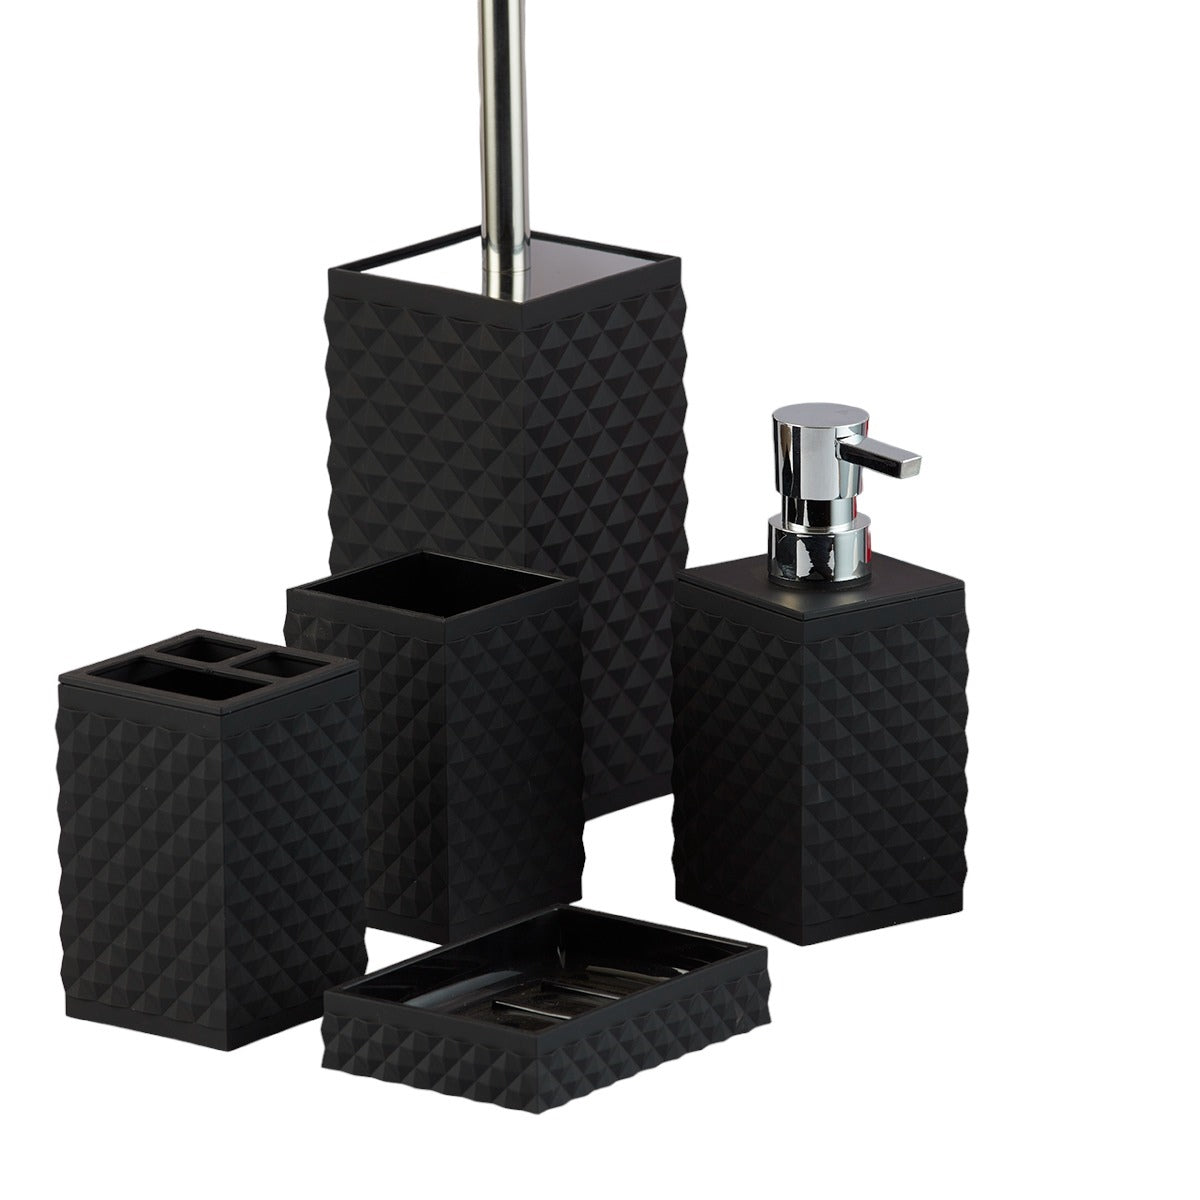 Acrylic Bathroom Accessories Set of 5 Bath Set with Soap Dispenser (10038)